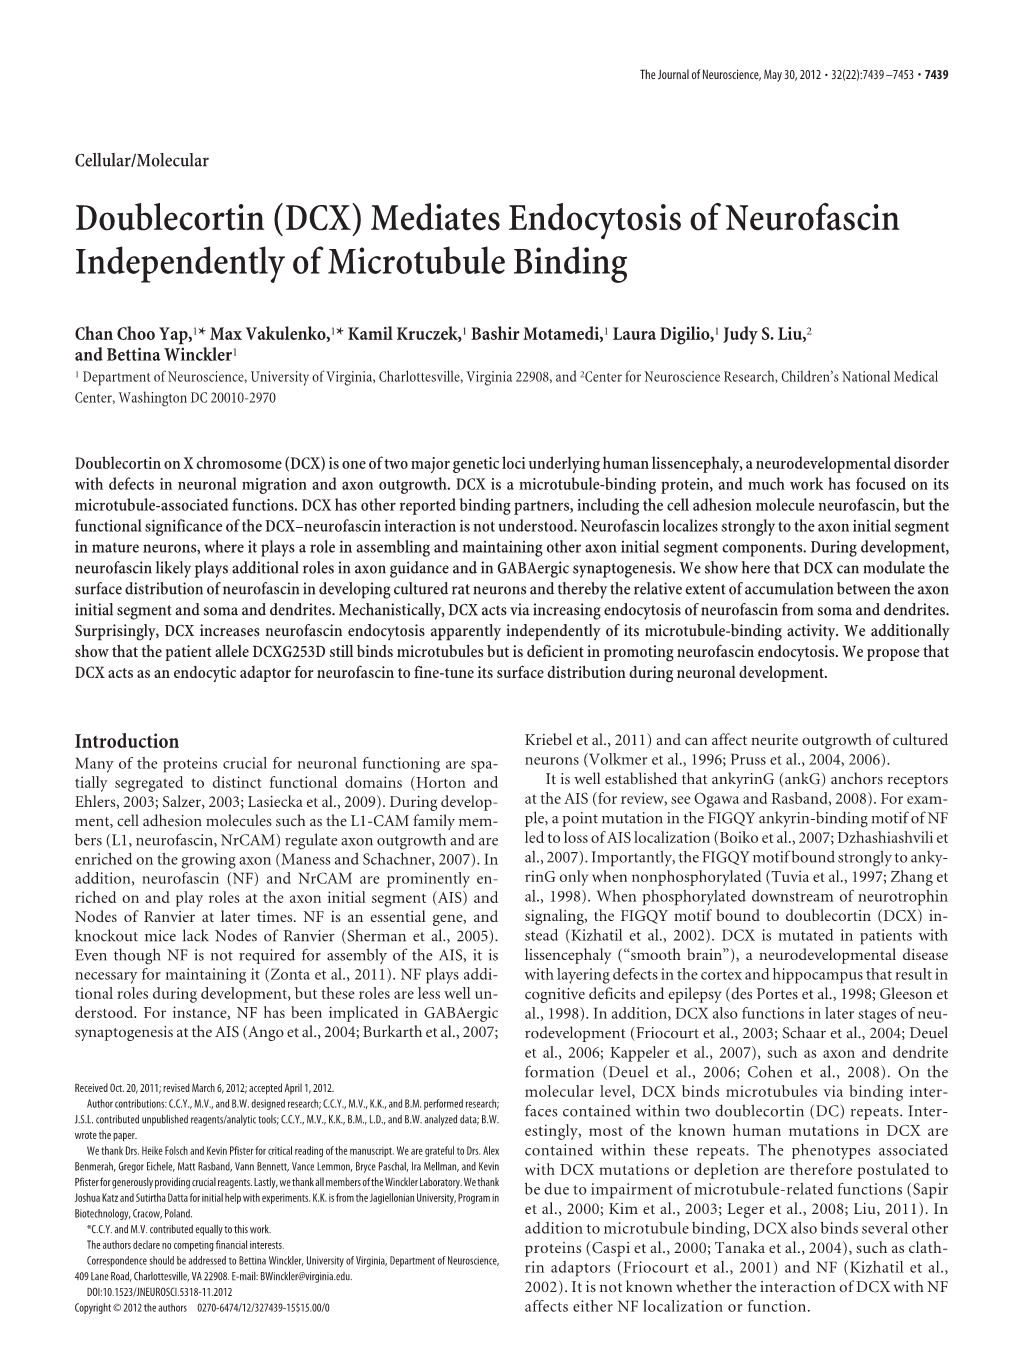 Doublecortin (DCX) Mediates Endocytosis of Neurofascin Independently of Microtubule Binding